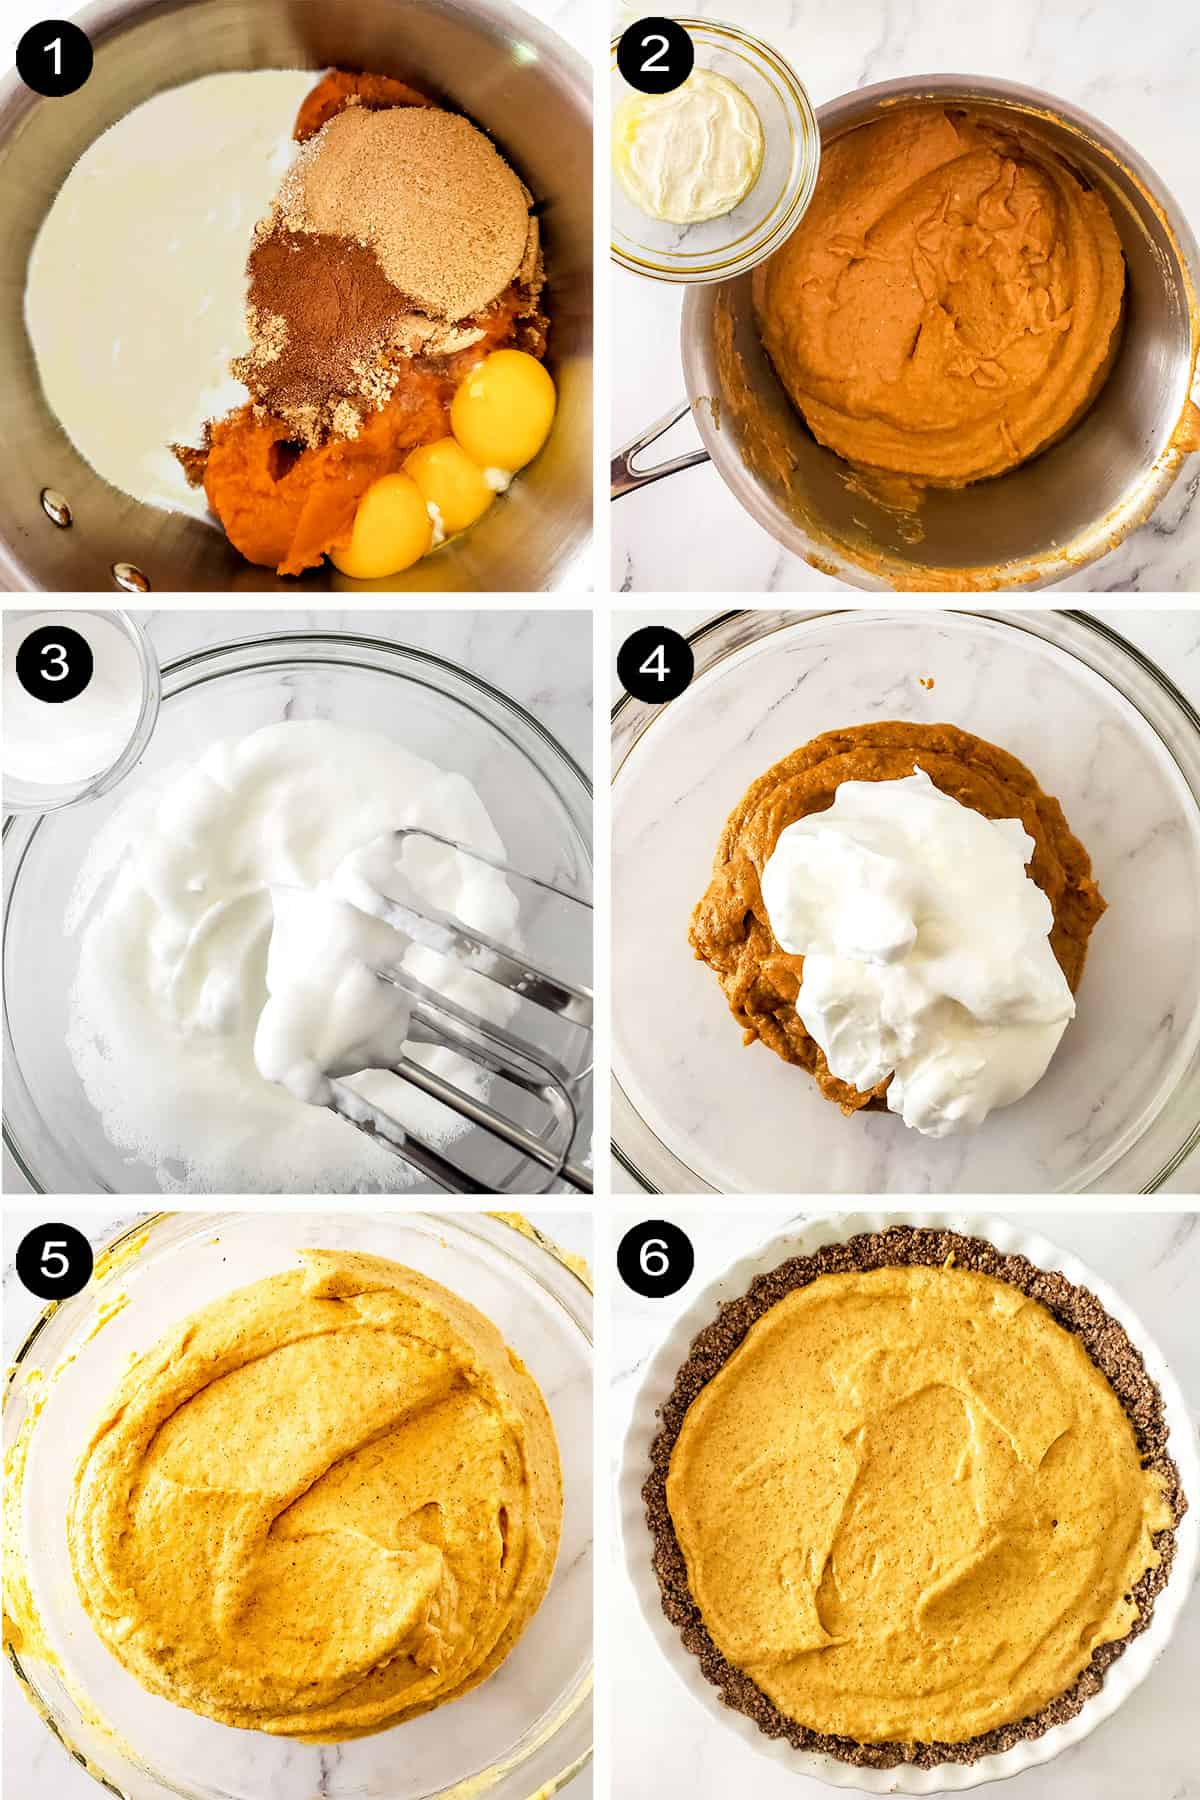 Steps to make pumpkin chiffon pie.